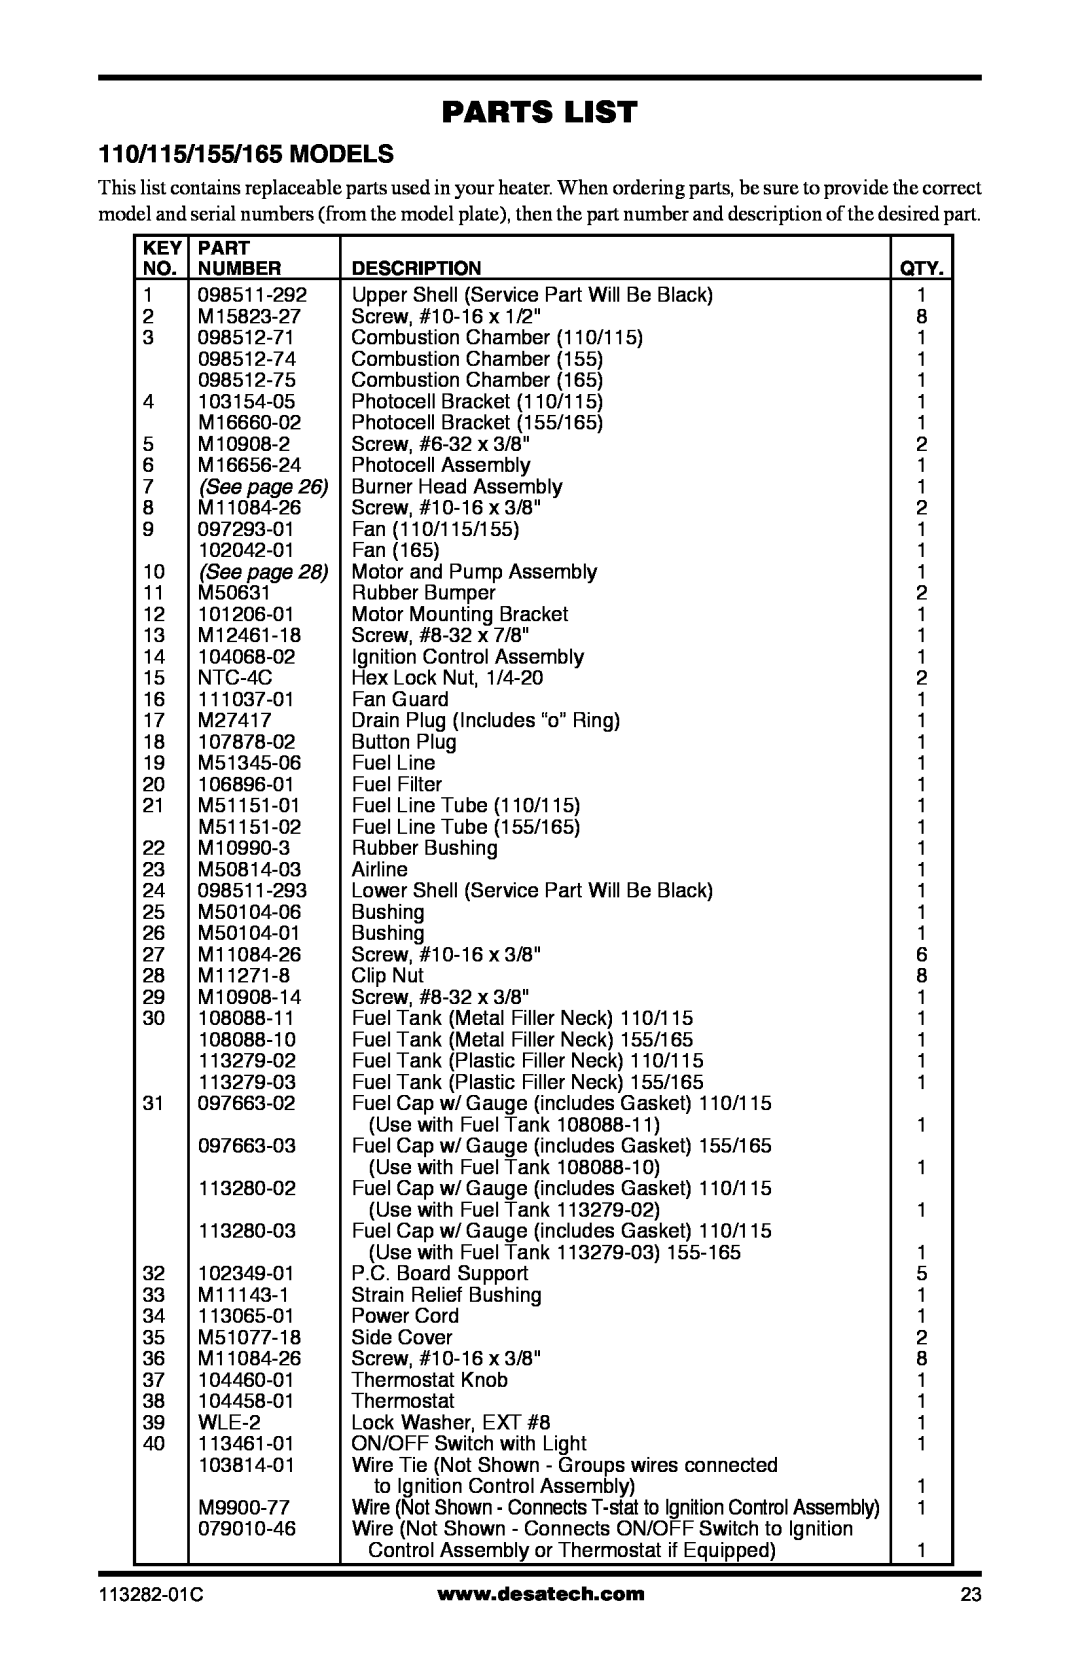 Desa BTU/HR owner manual Parts List, 110/115/155/165 MODELS, See page 